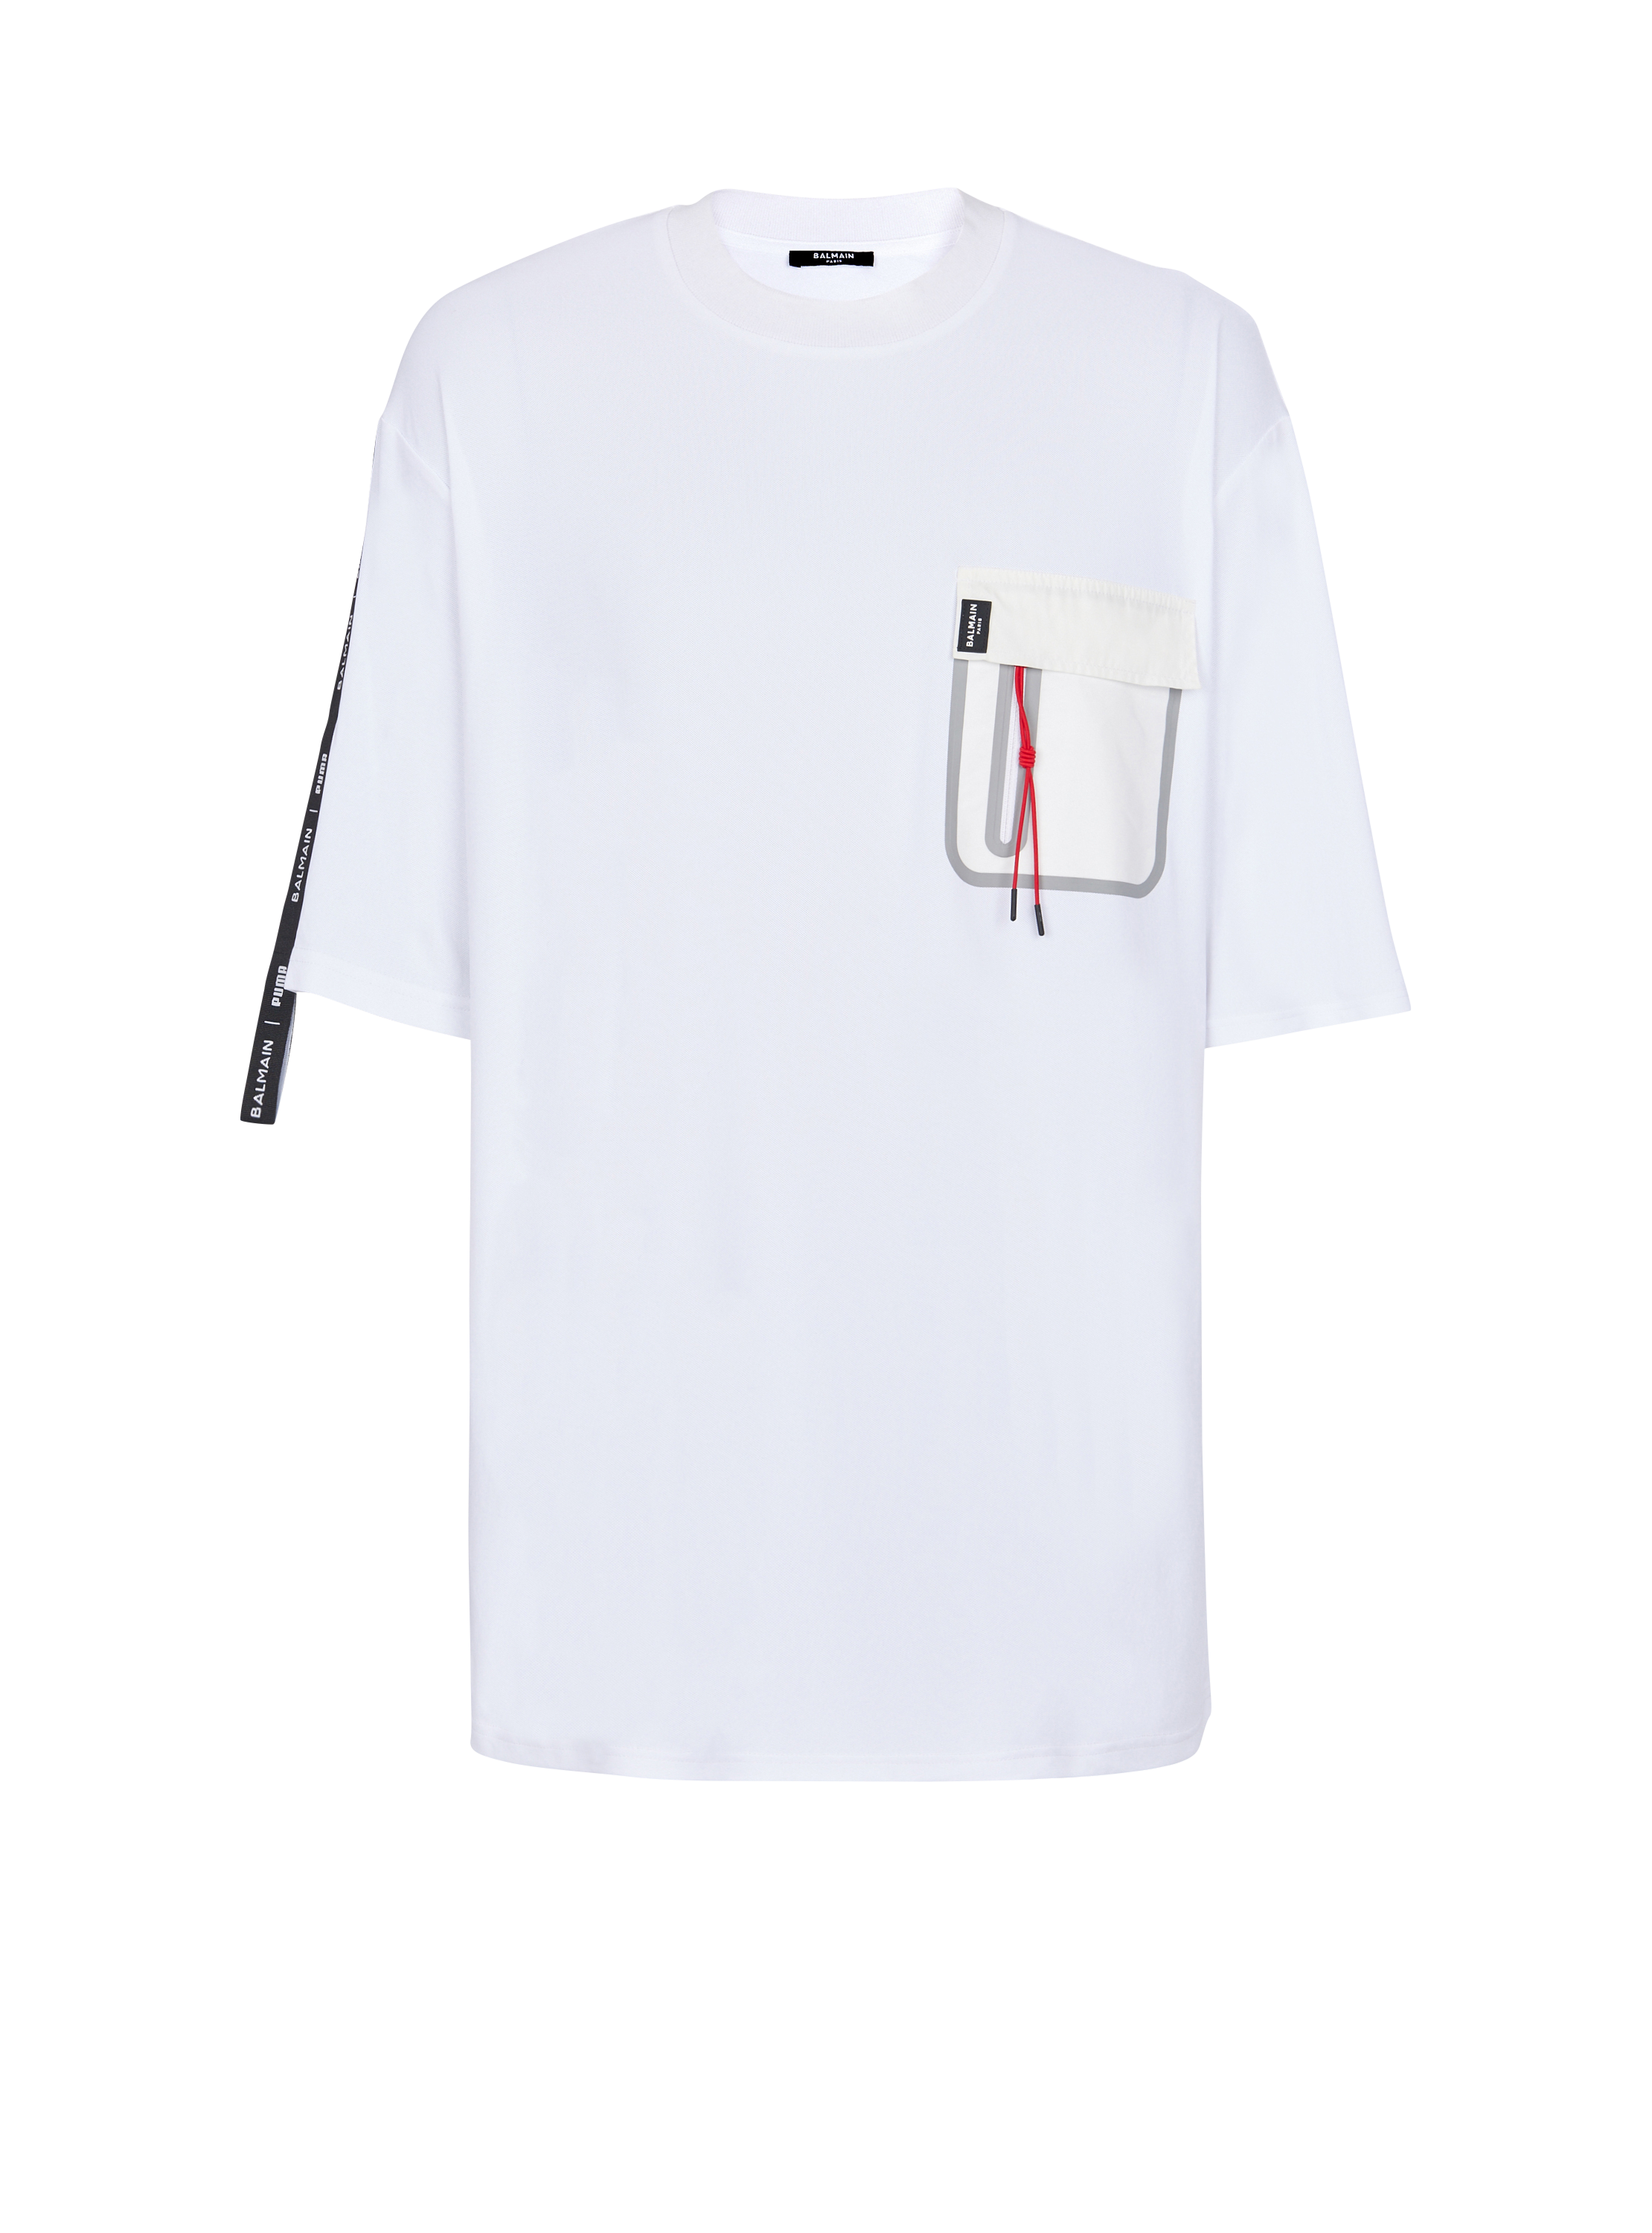 Balmain x Puma - T-shirt oversize con tasca, bianco, hi-res